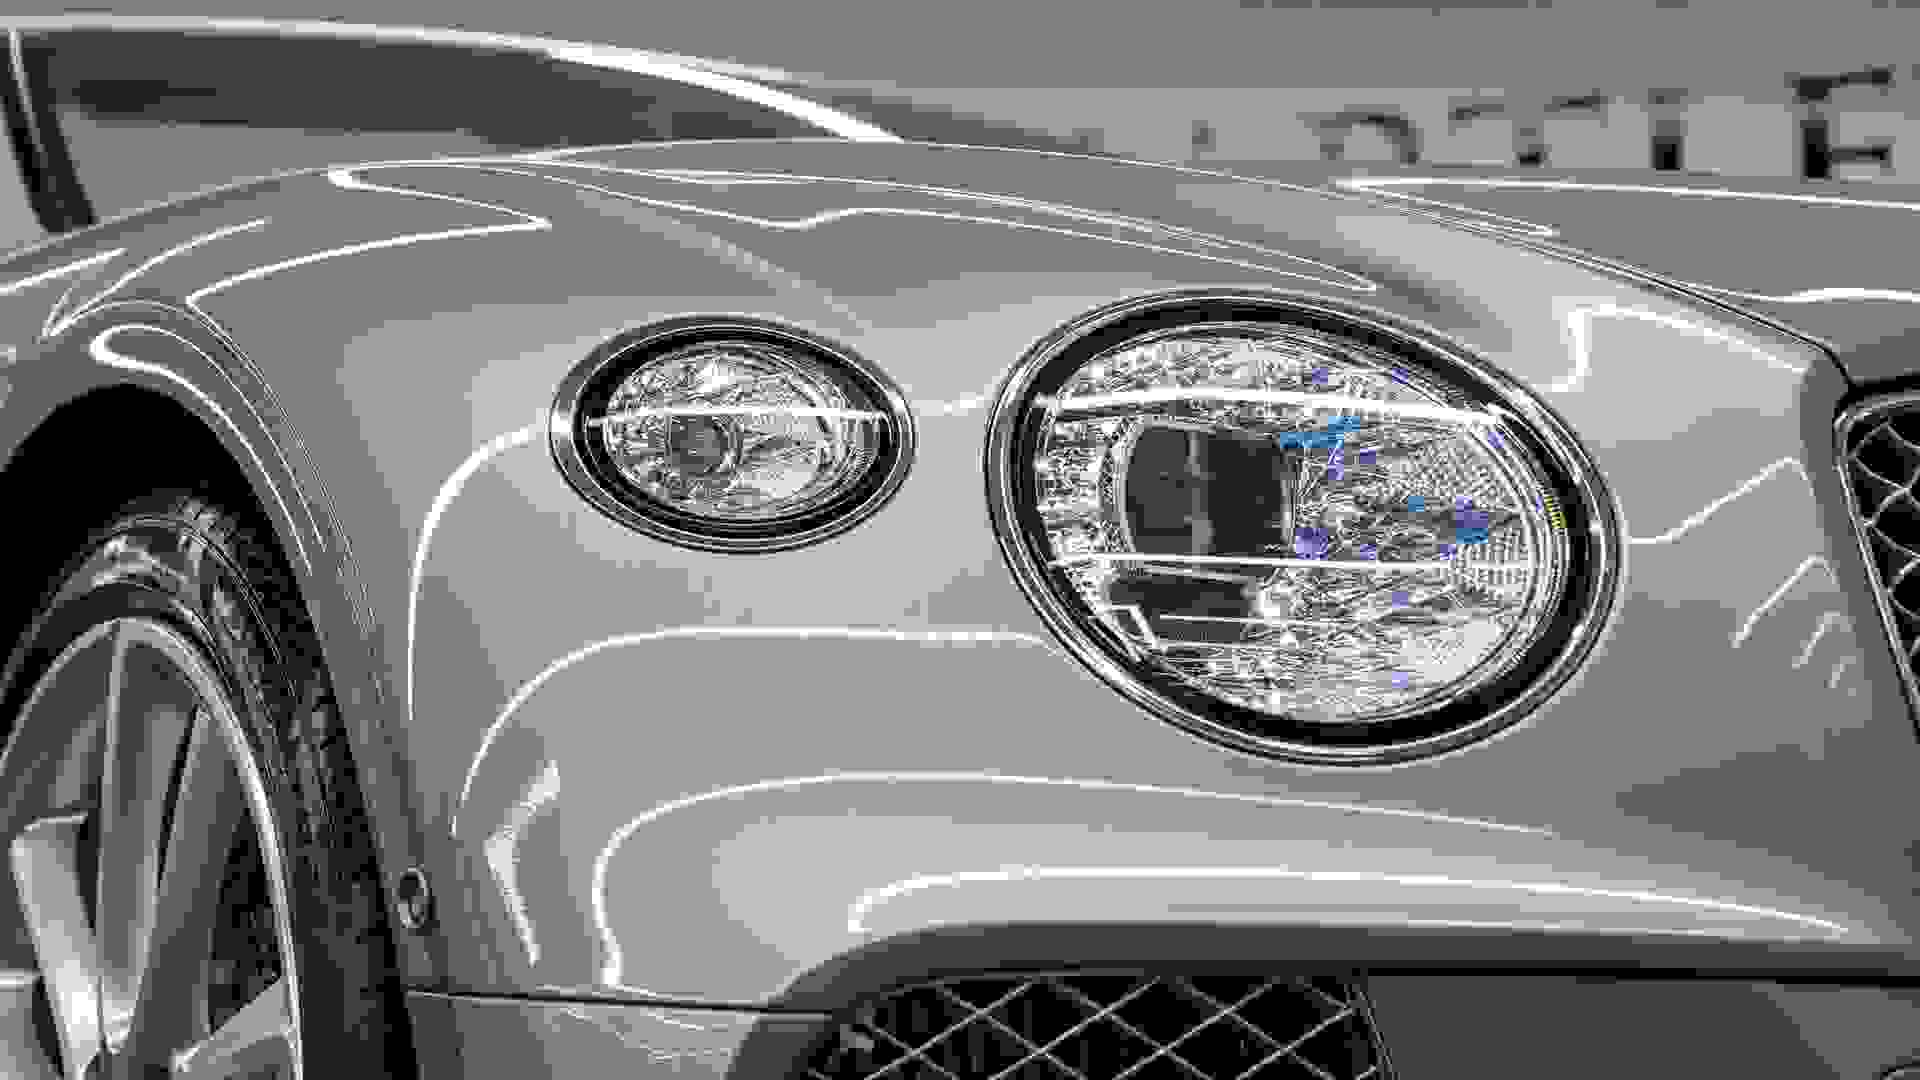 Bentley Continental GTC Photo 051525d2-53b9-48e4-a800-c59050e5f242.jpg